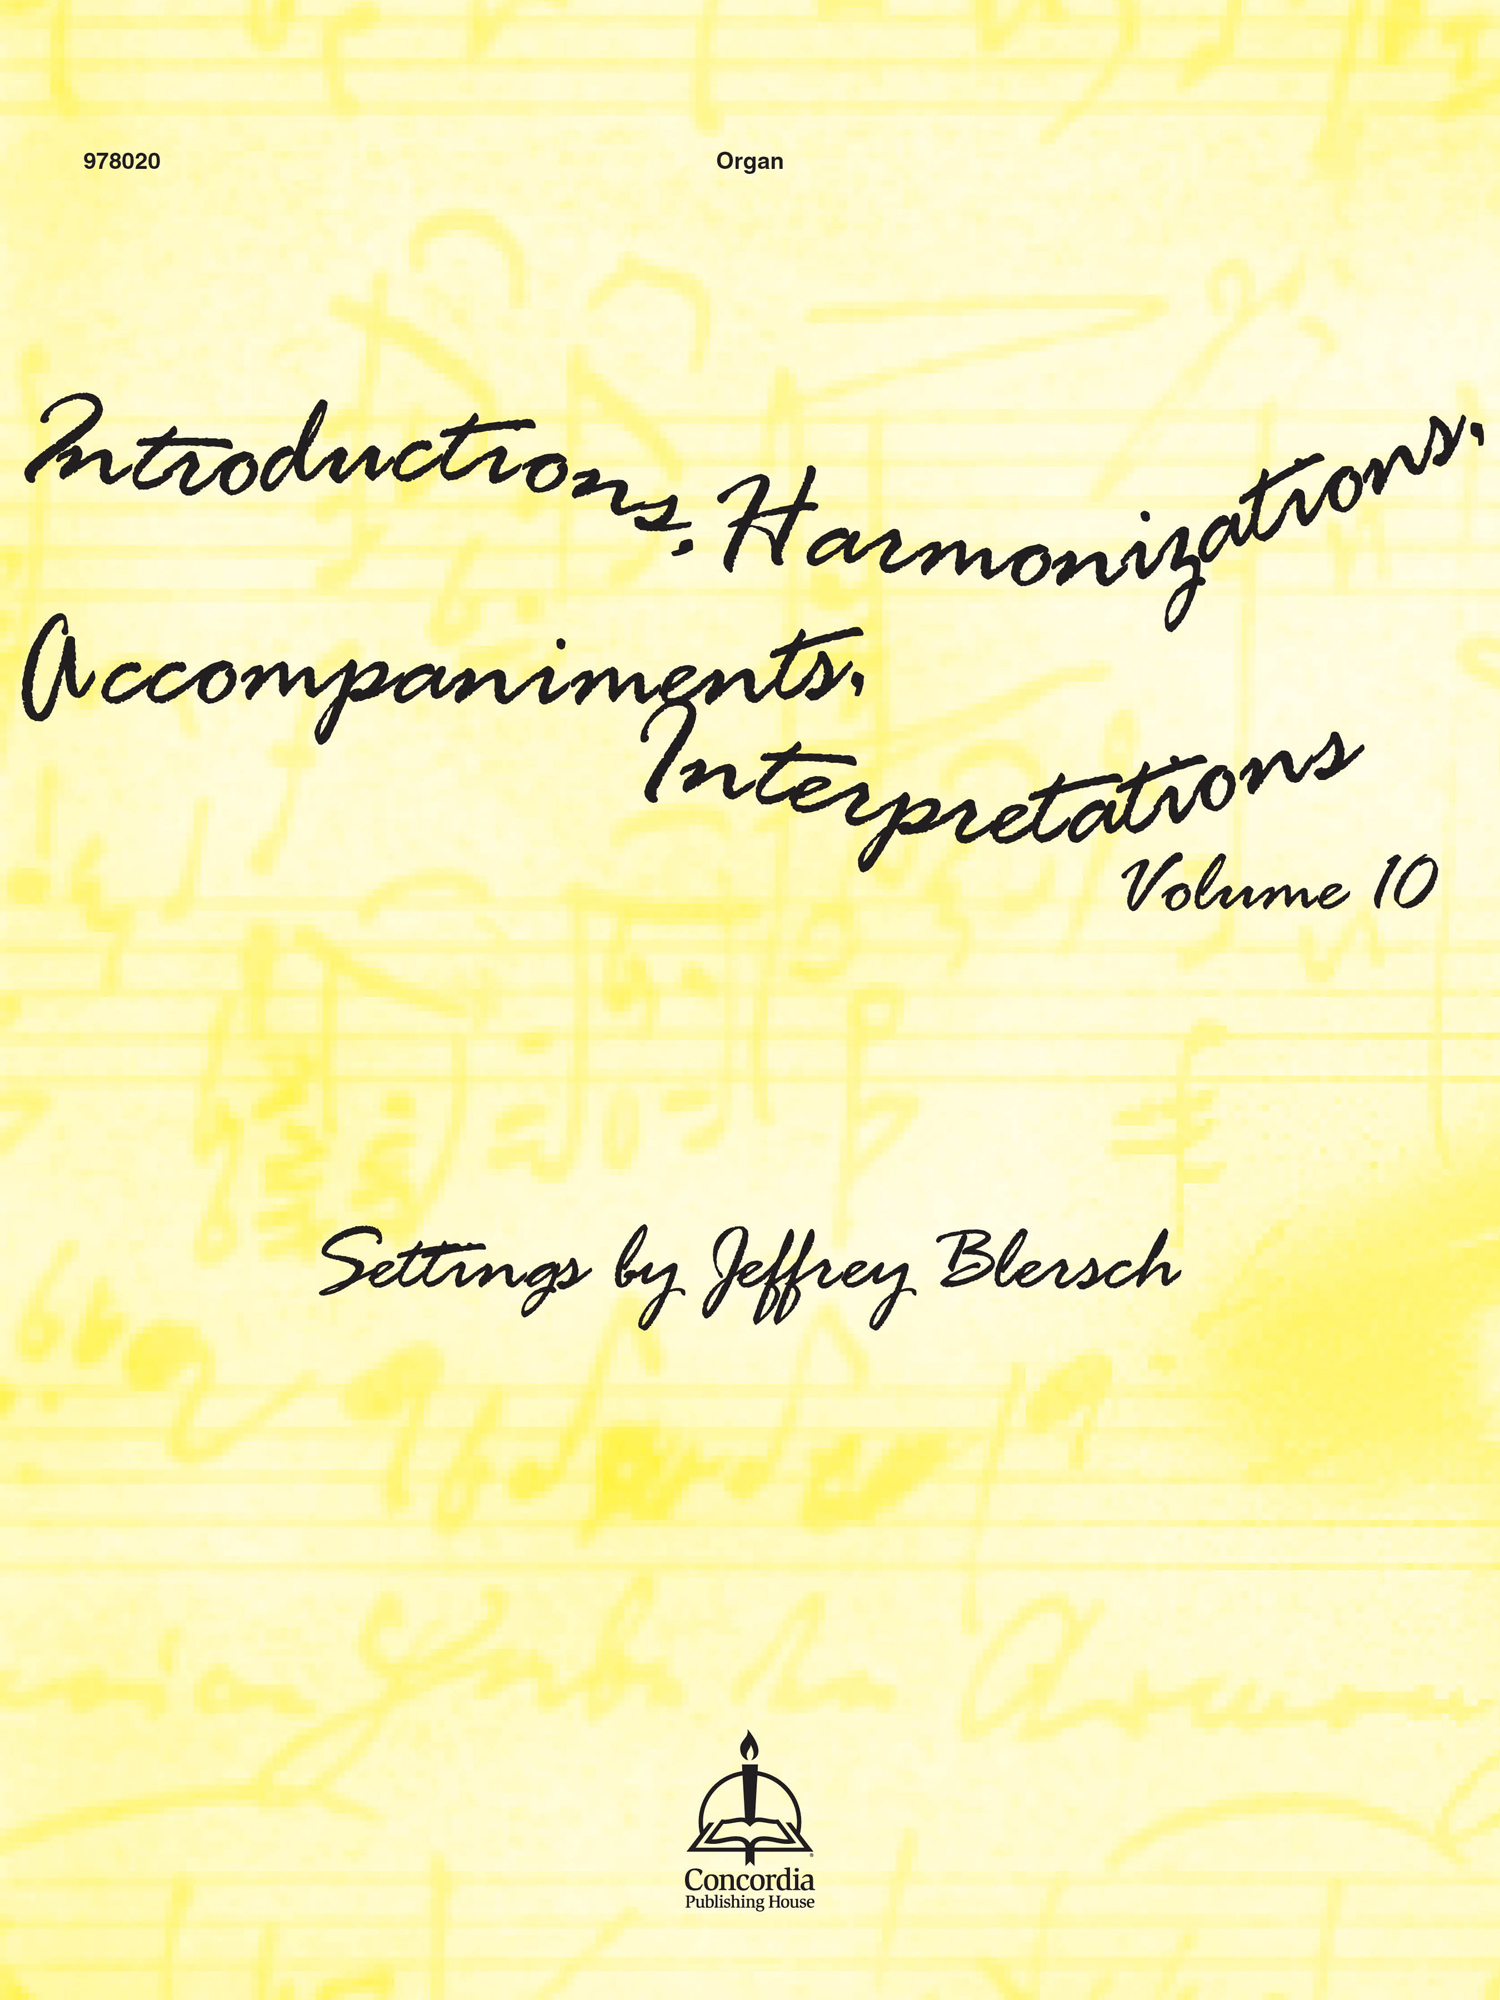 Introductions, Harmonizations, Accompaniments, Interpretations - Vol. 10